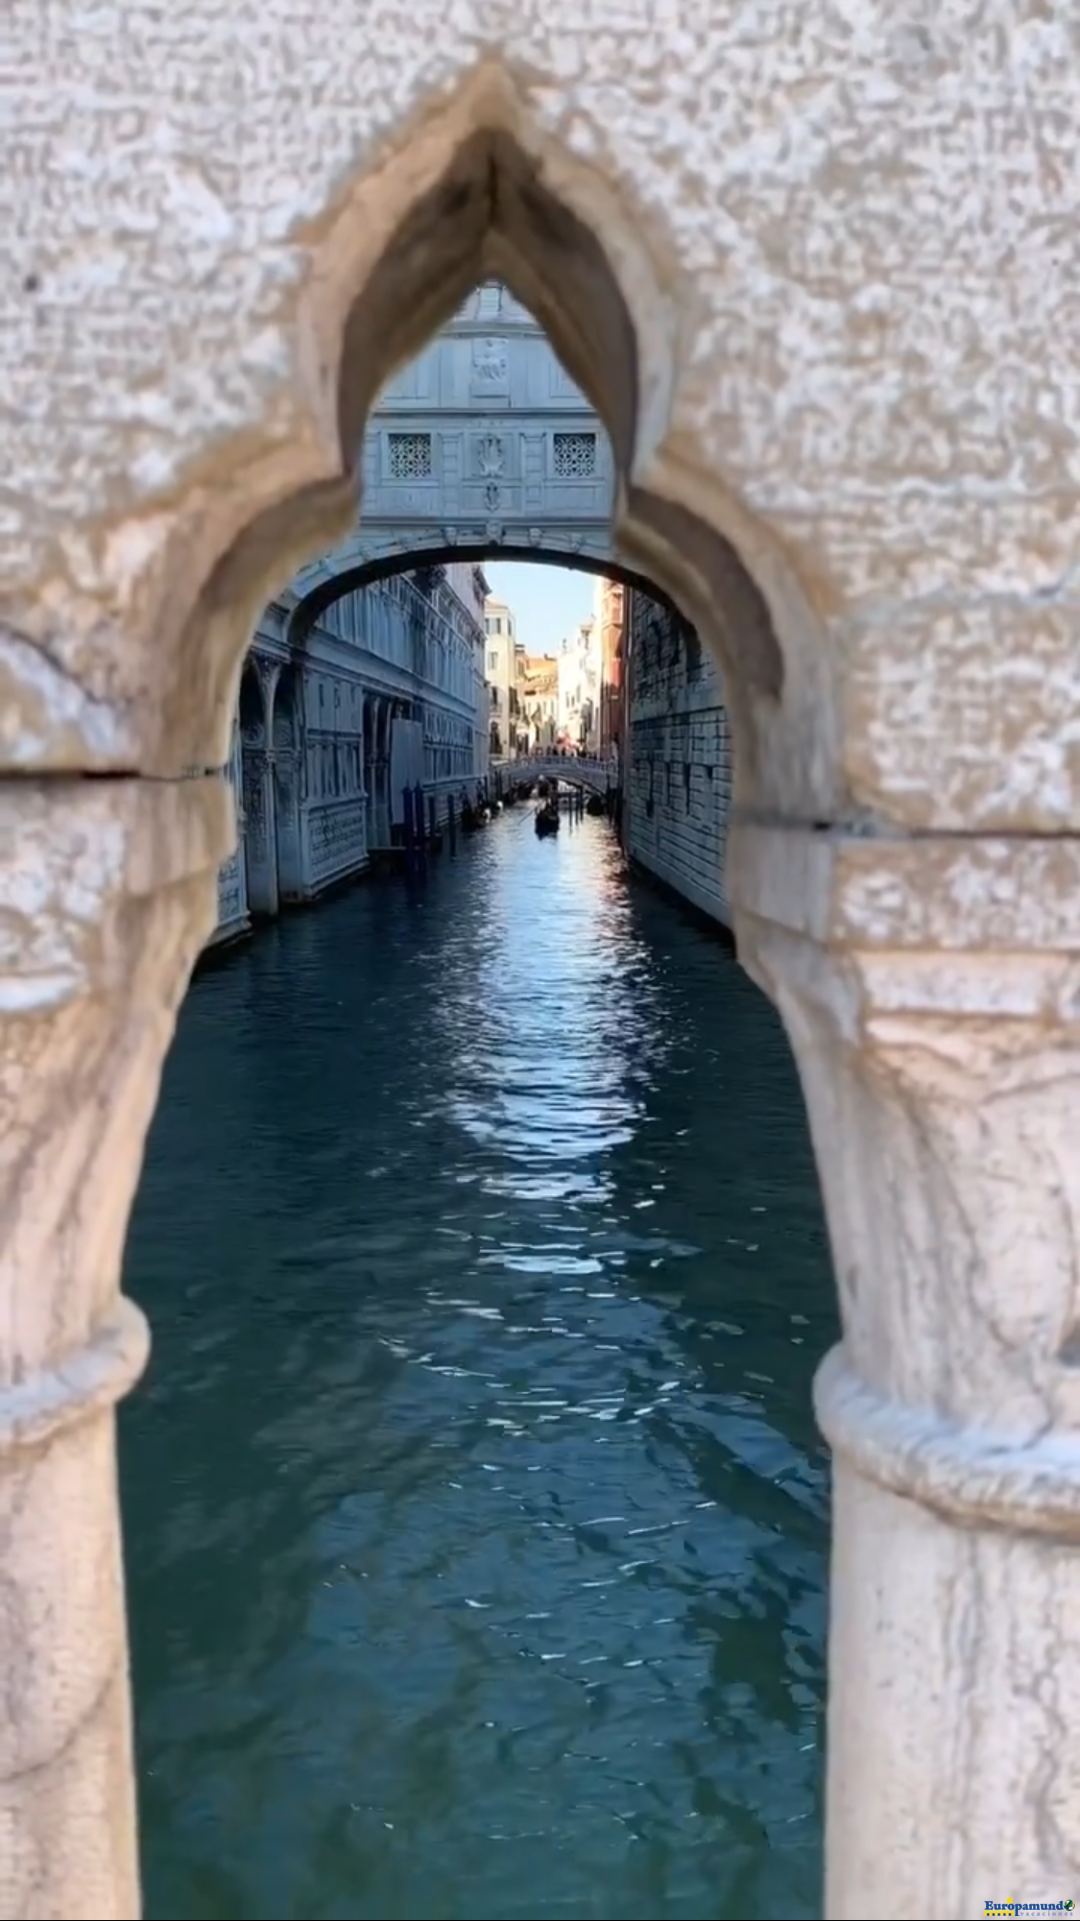 Descubliendo Venecia